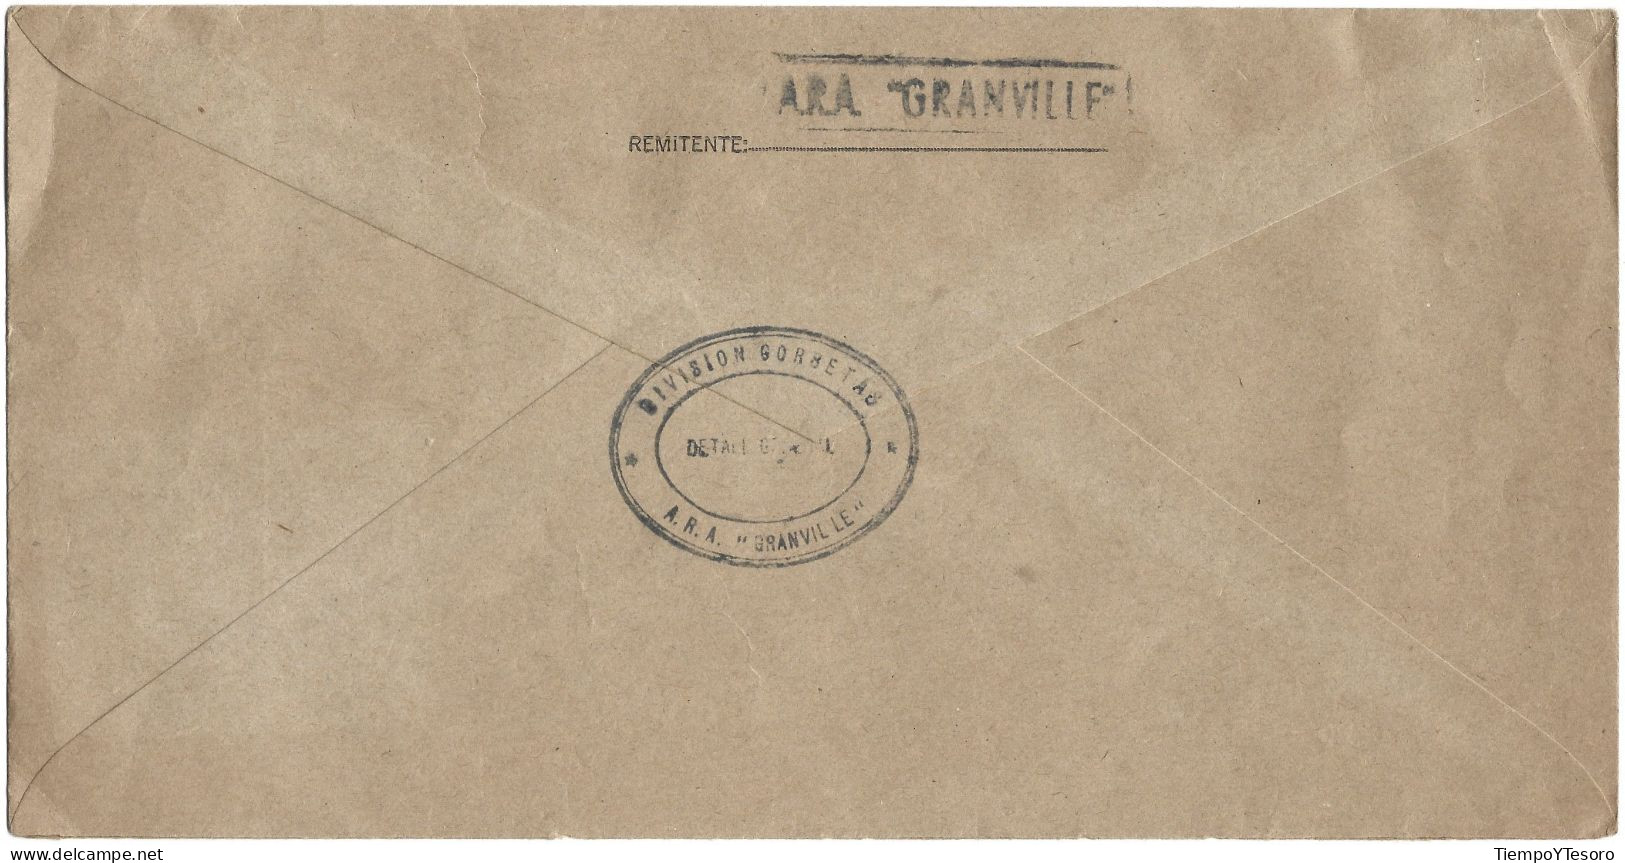 Correspondence - Argentina, Armada Argentina, ARA Granville,1997, N°220 - Oblitérés